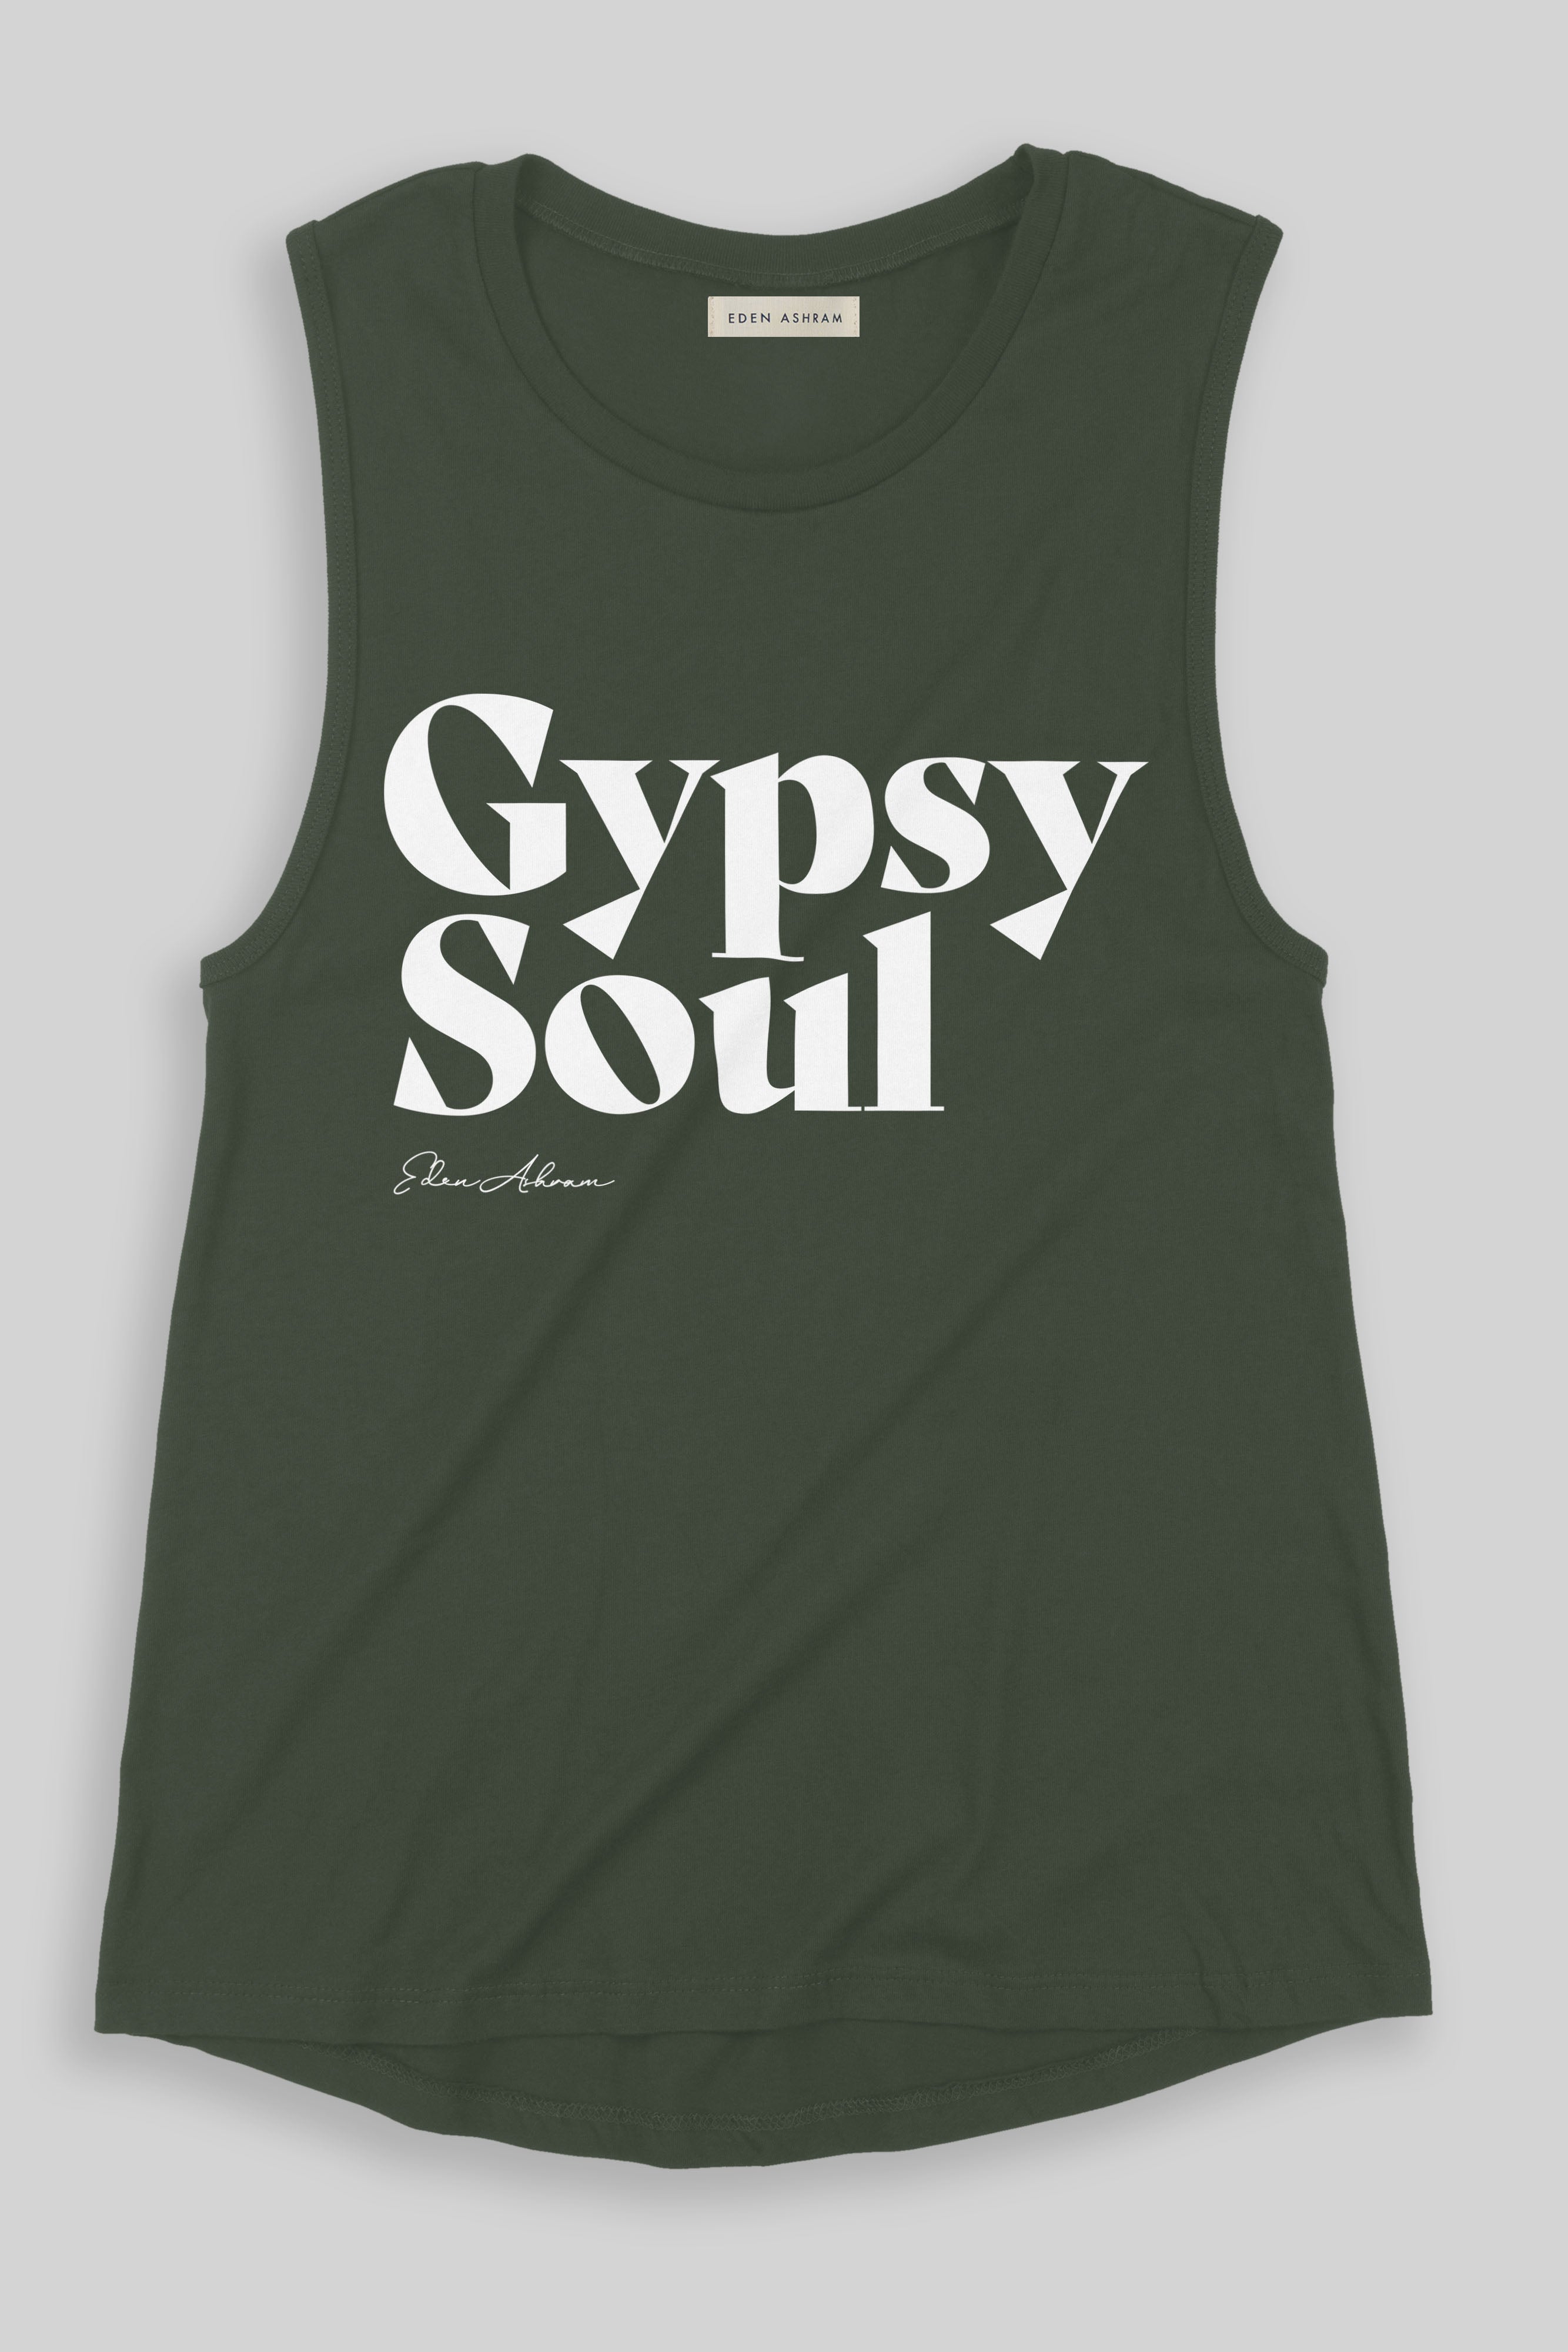 EDEN ASHRAM Gypsy Soul Premium Jersey Muscle Tank Army Green